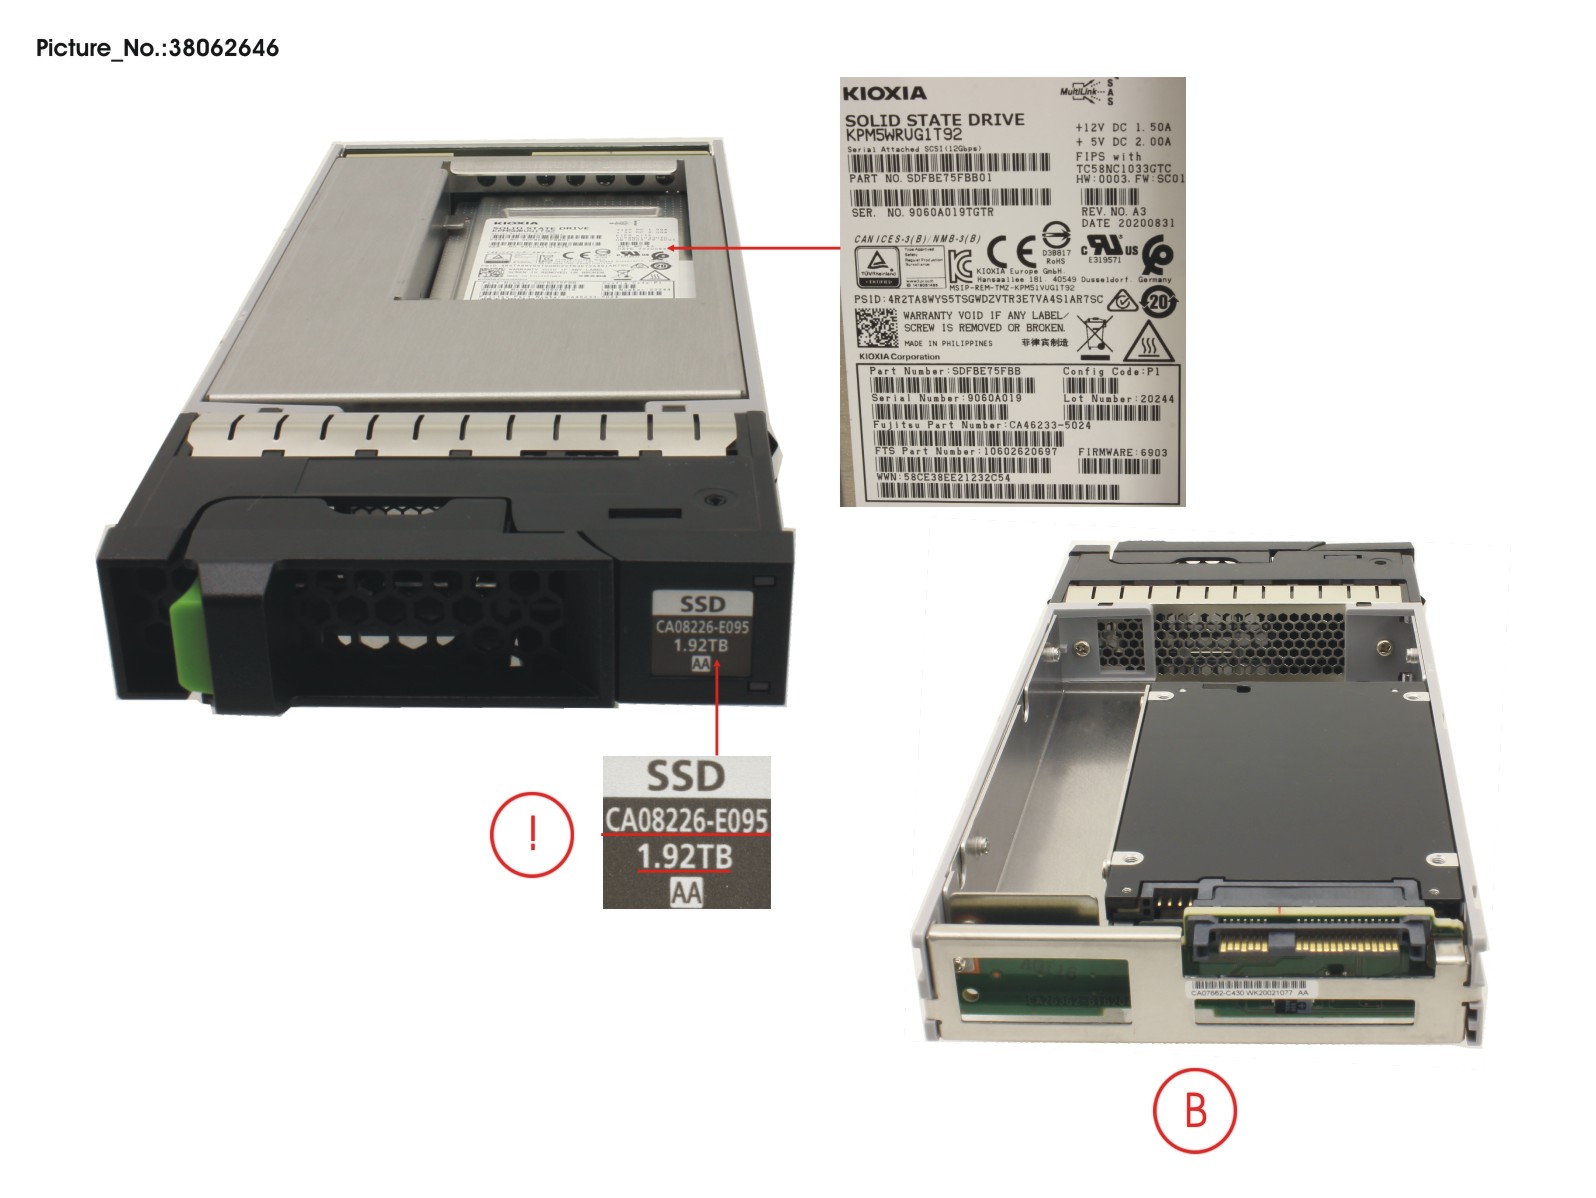 DX S5 FIPS SSD SAS 3.5 1.92TB 12G